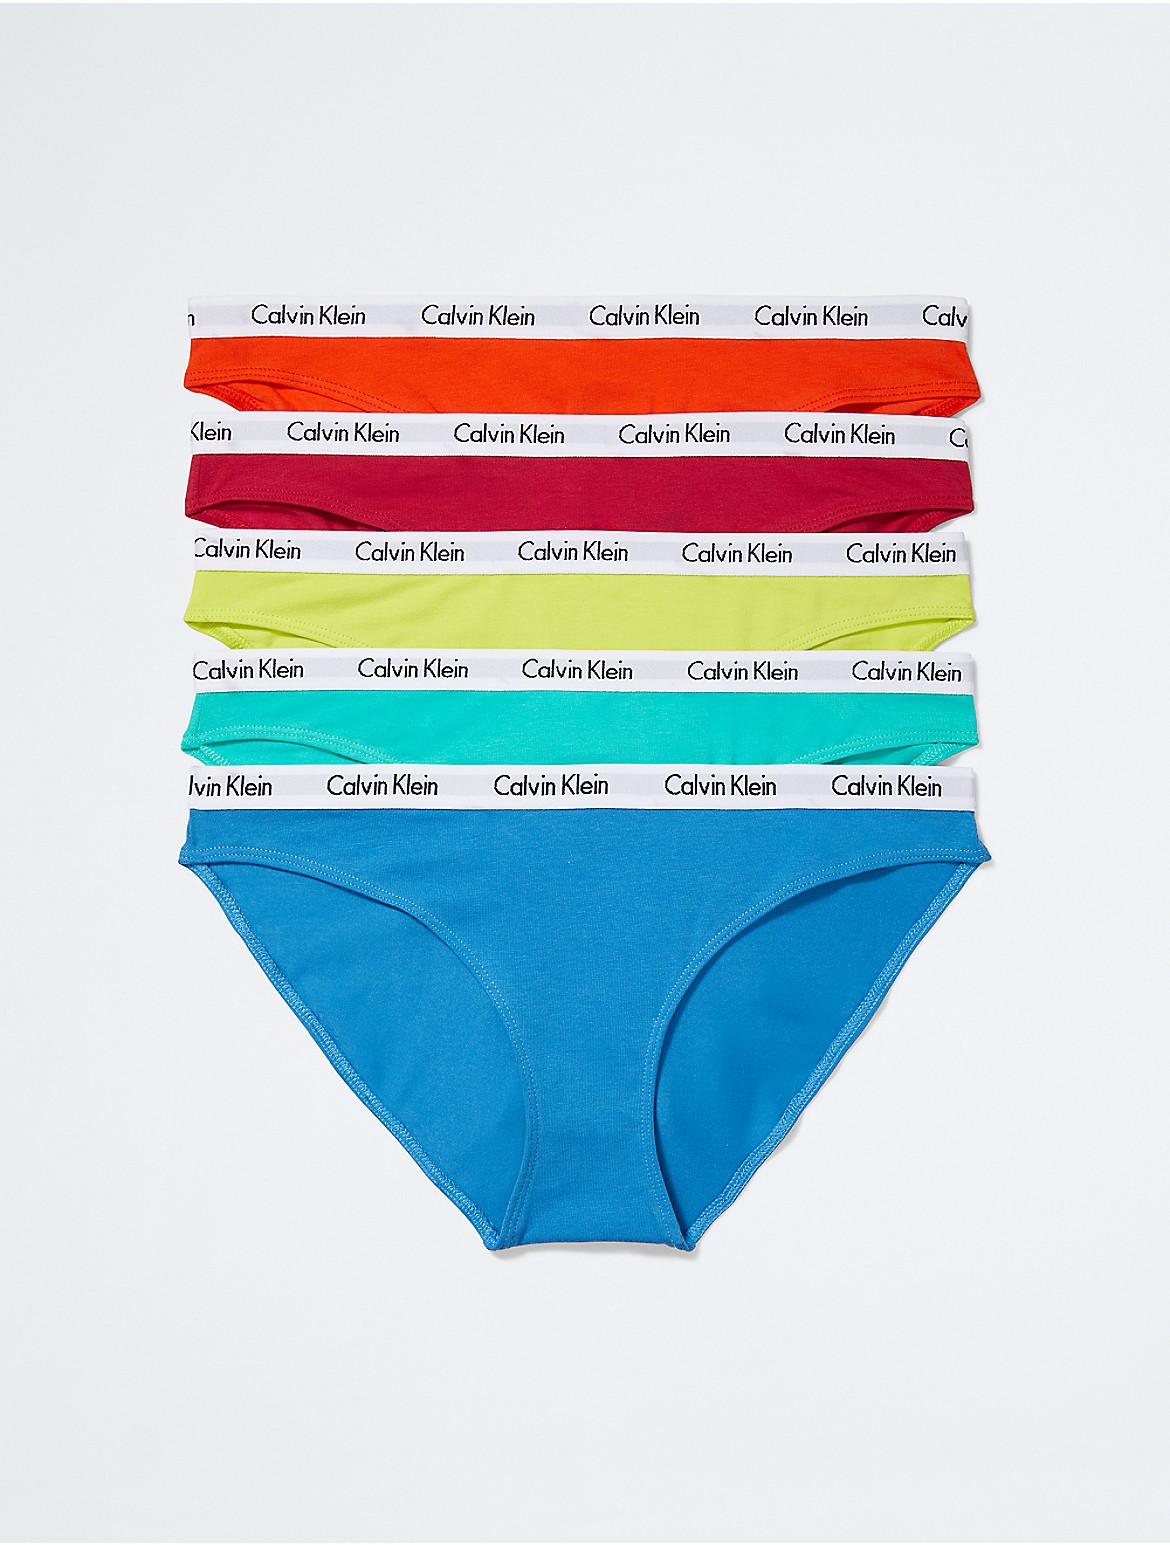 Calvin Klein Women's Pride Carousel Logo Cotton 5-Pack Bikini - Multi - S -  Modafirma